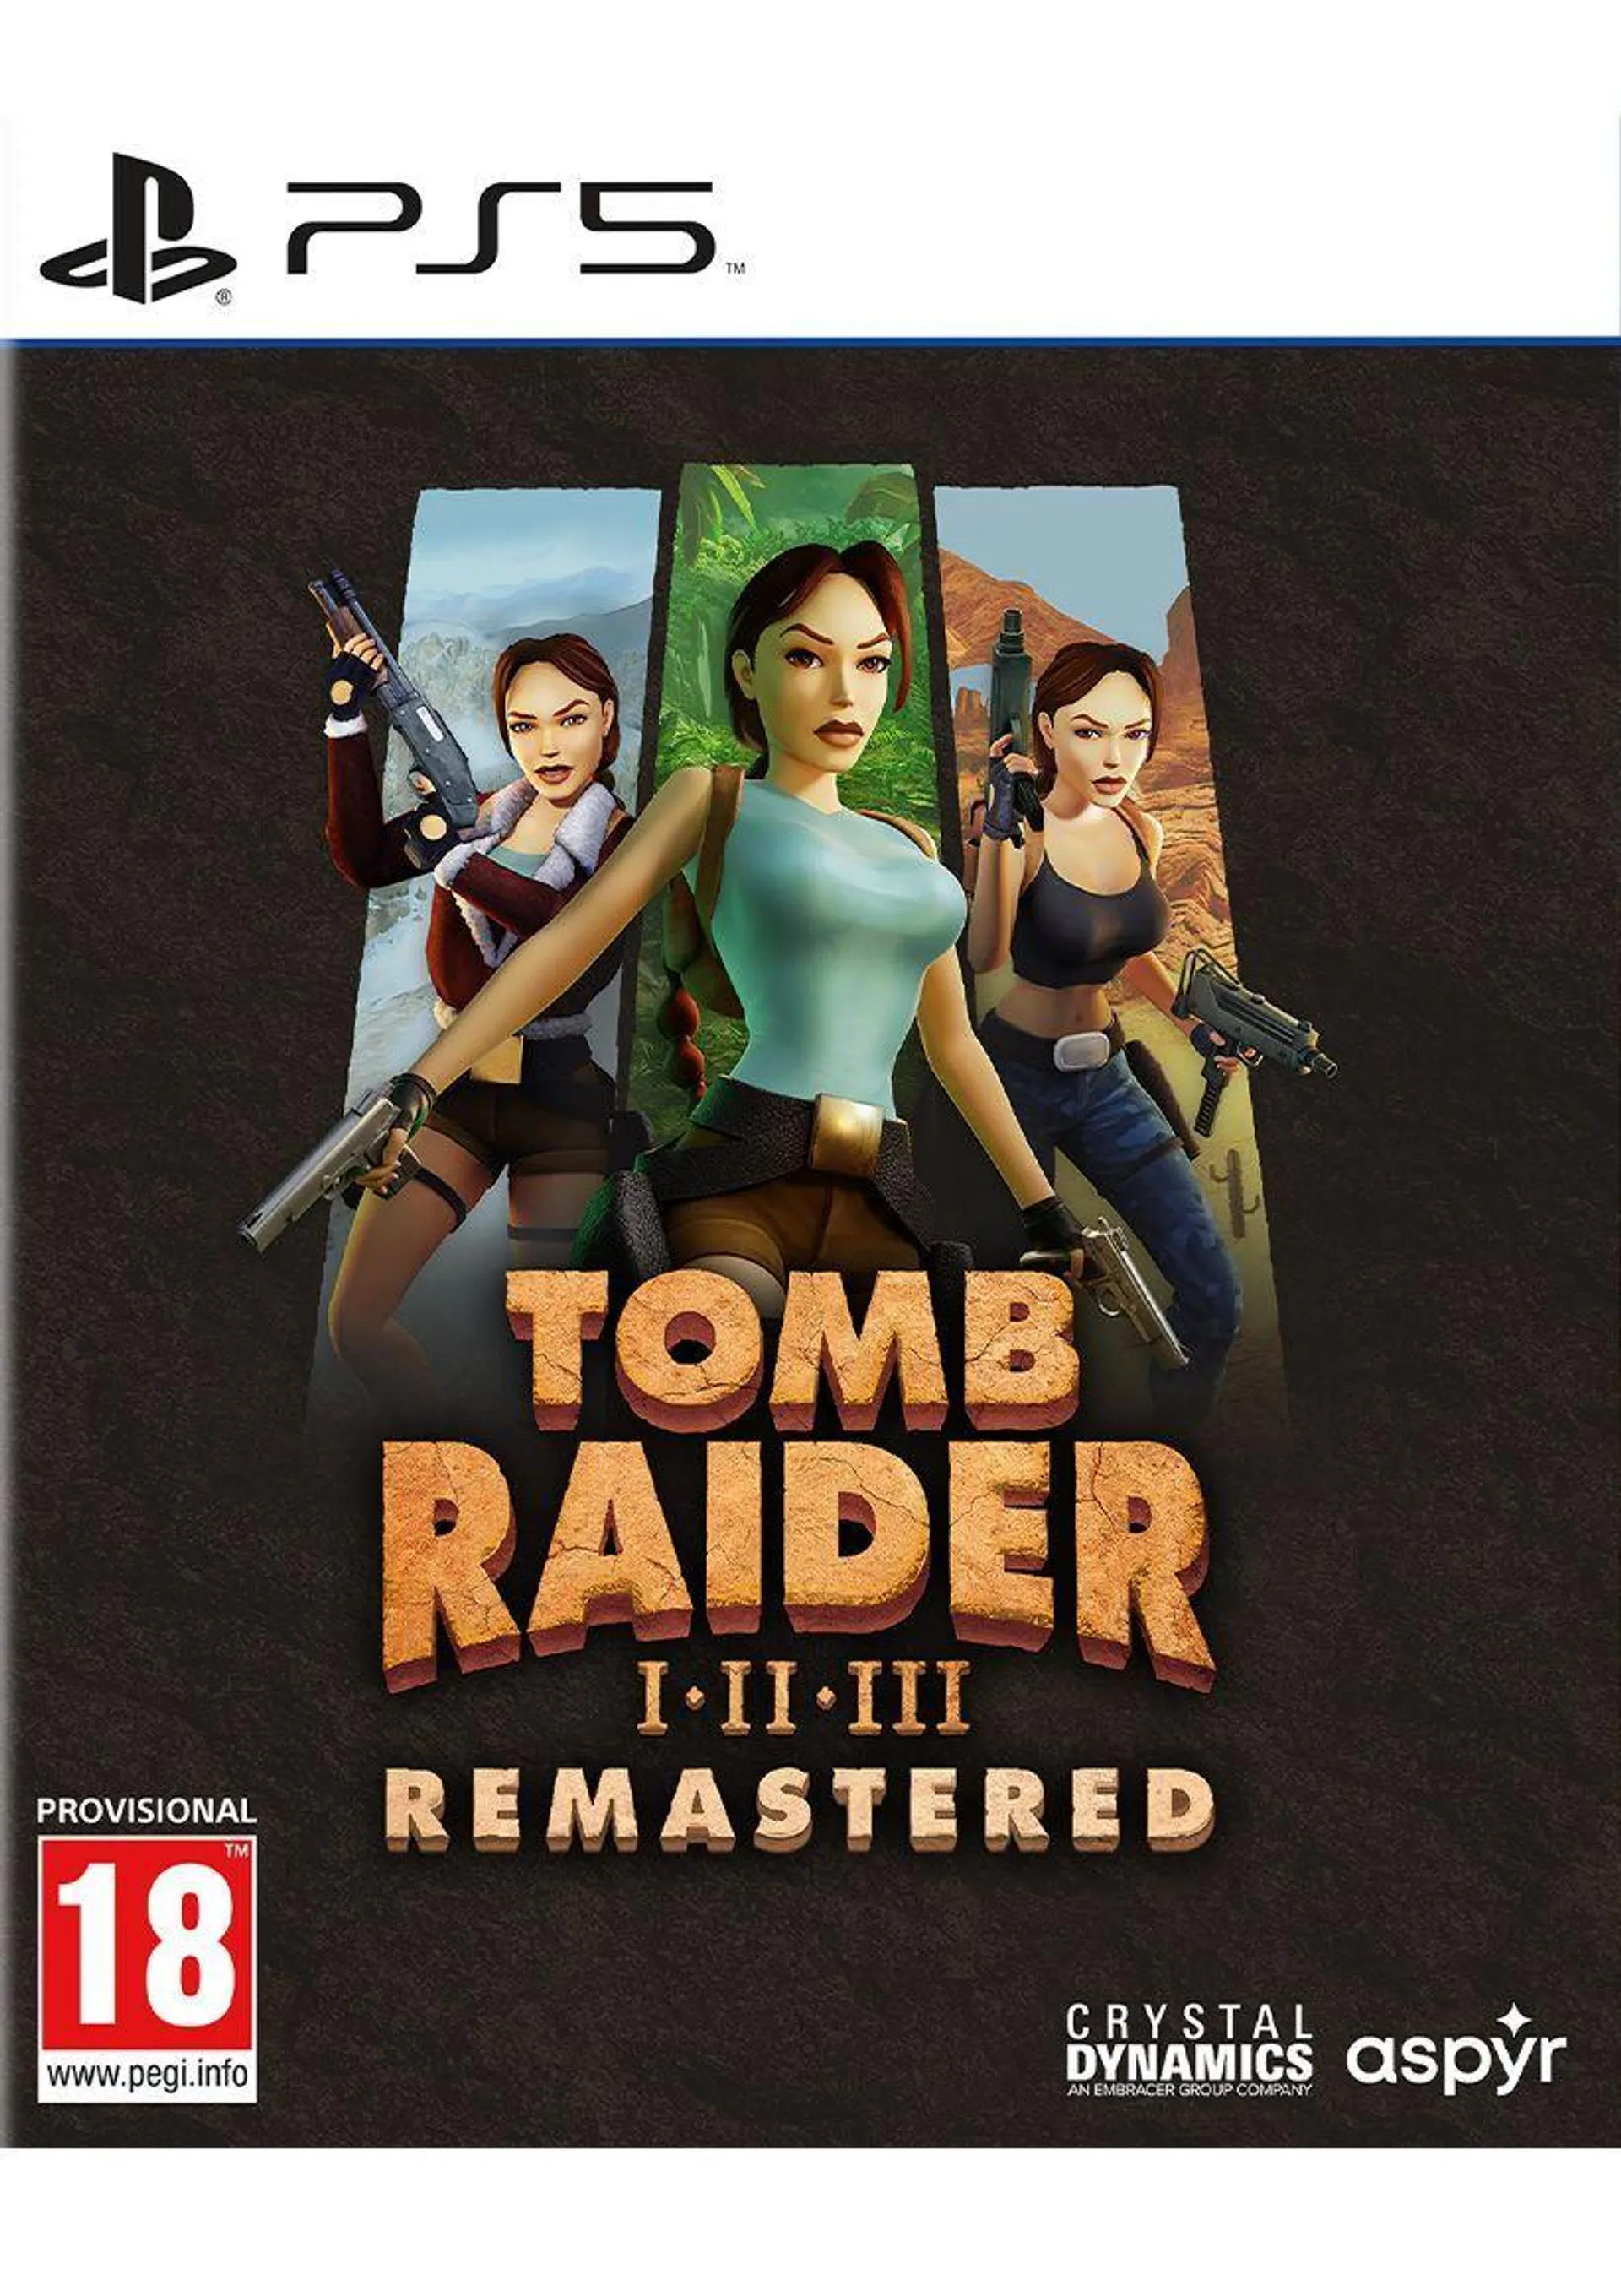 Tomb Raider I-III Remastered Starring Lara Croft on PlayStation 5